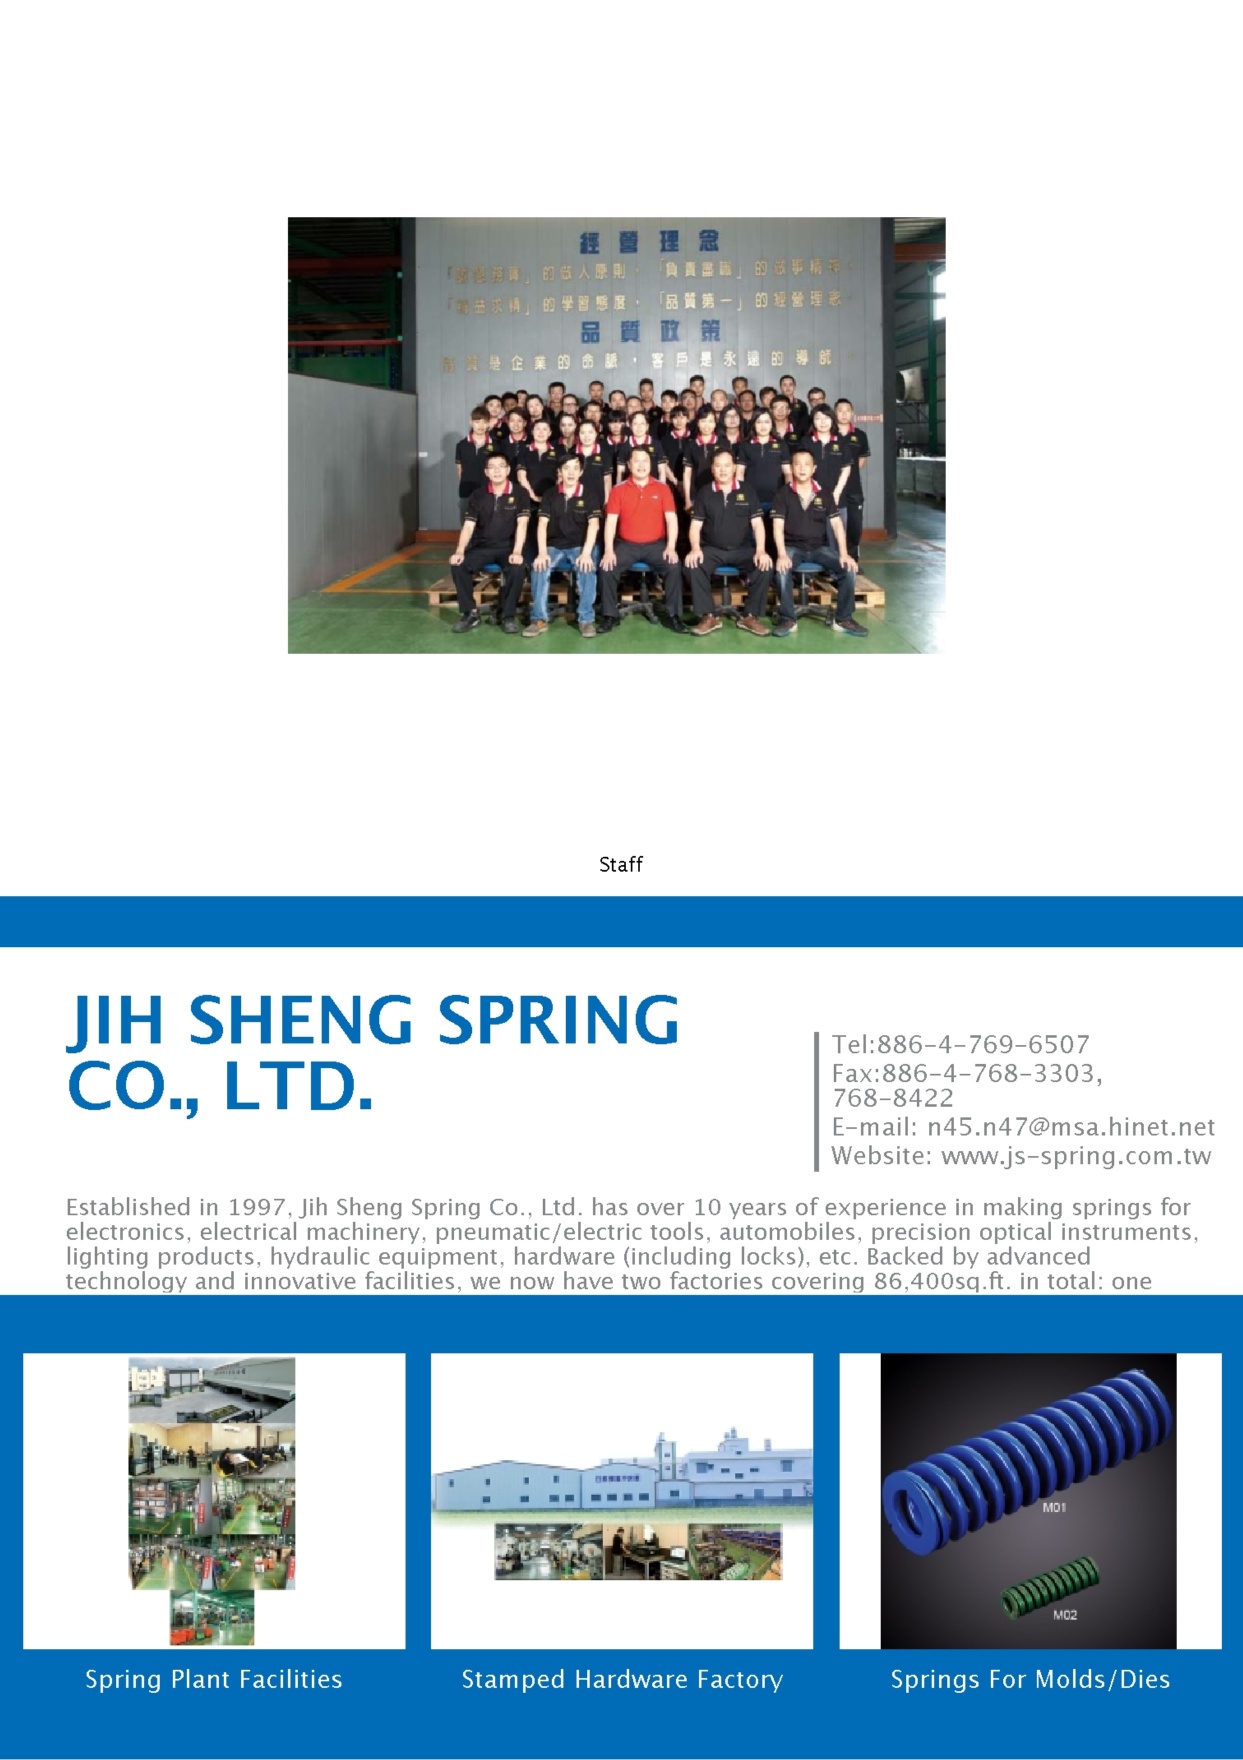 JIH SHENG SPRING CO., LTD.